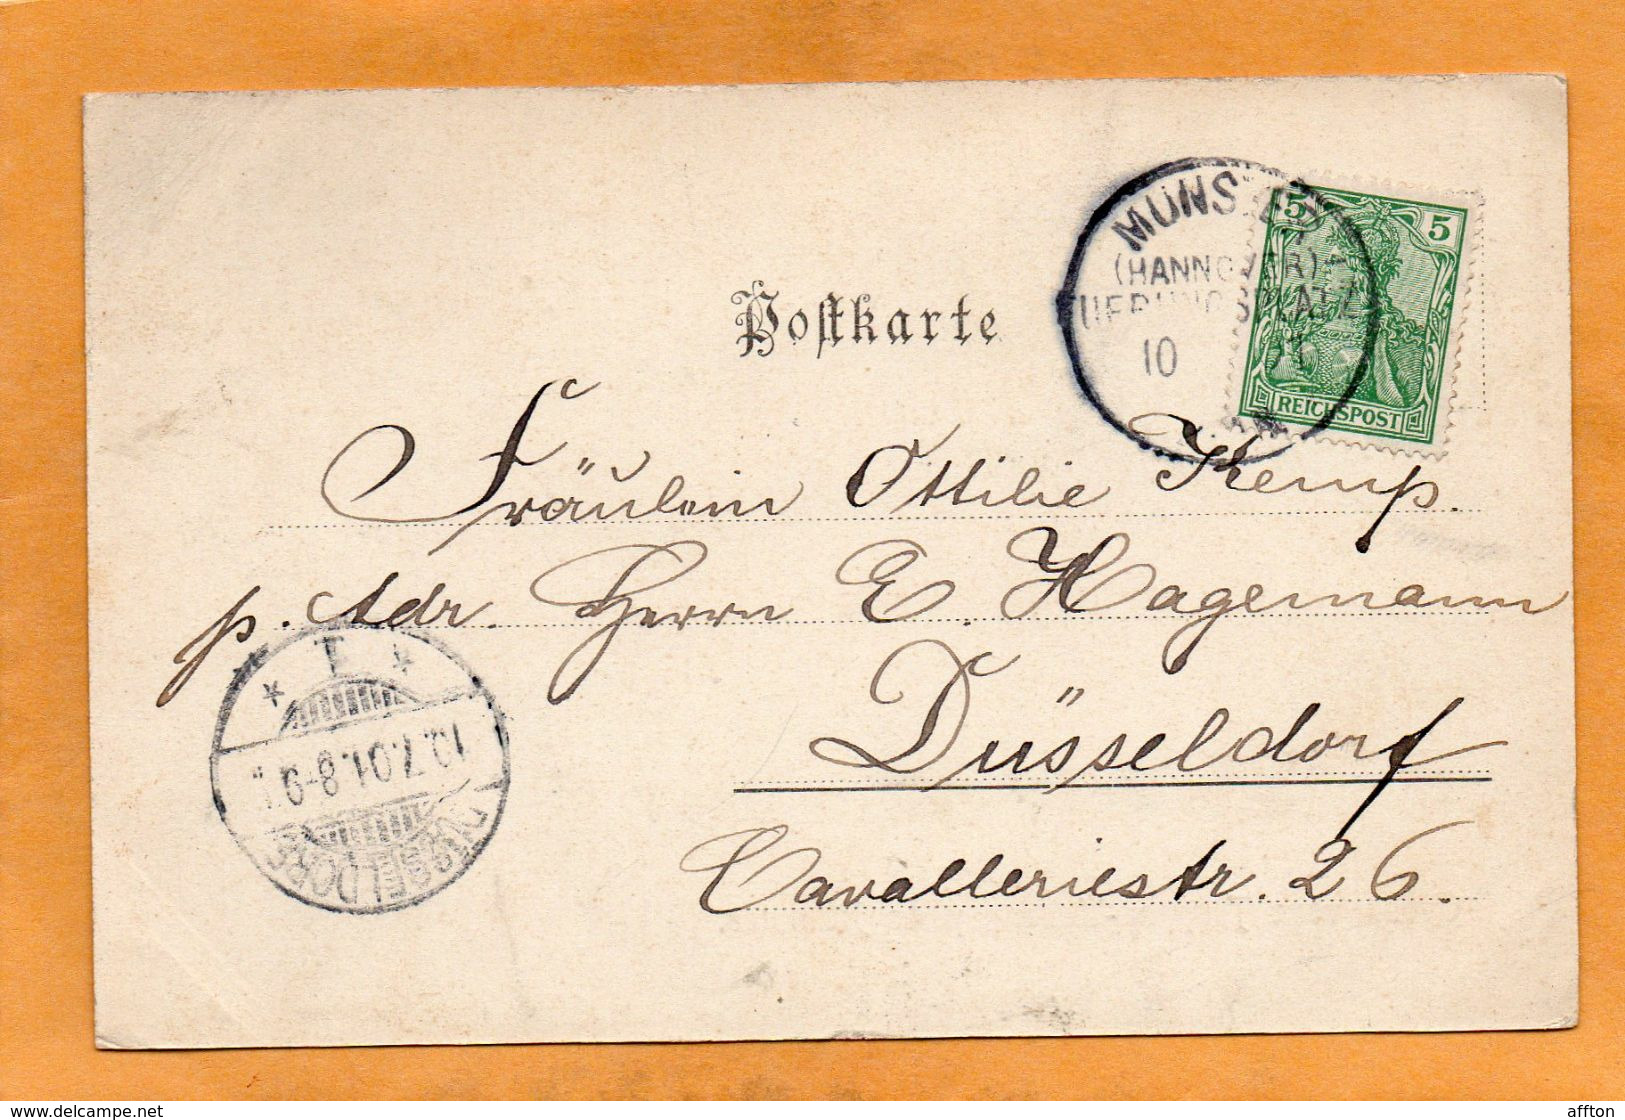 Munster I W 1900 Postcard - Munster